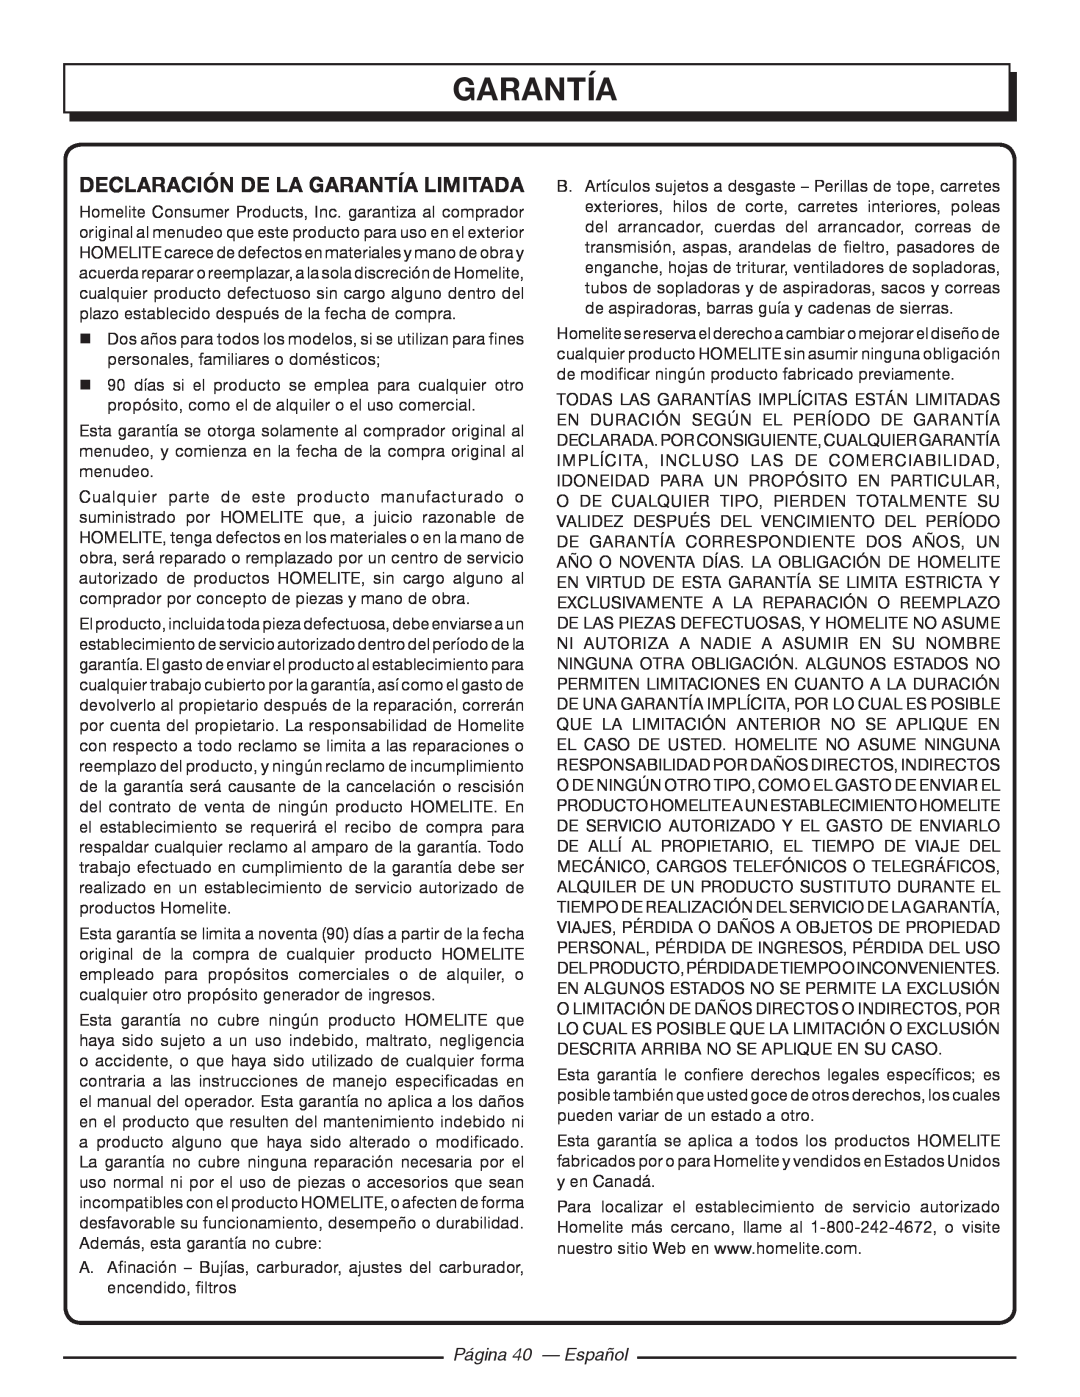 Homelite UT10918, UT10585, UT10582, UT10562, UT10560 garantía, Declaración De La Garantía Limitada, Página 40 - Español 